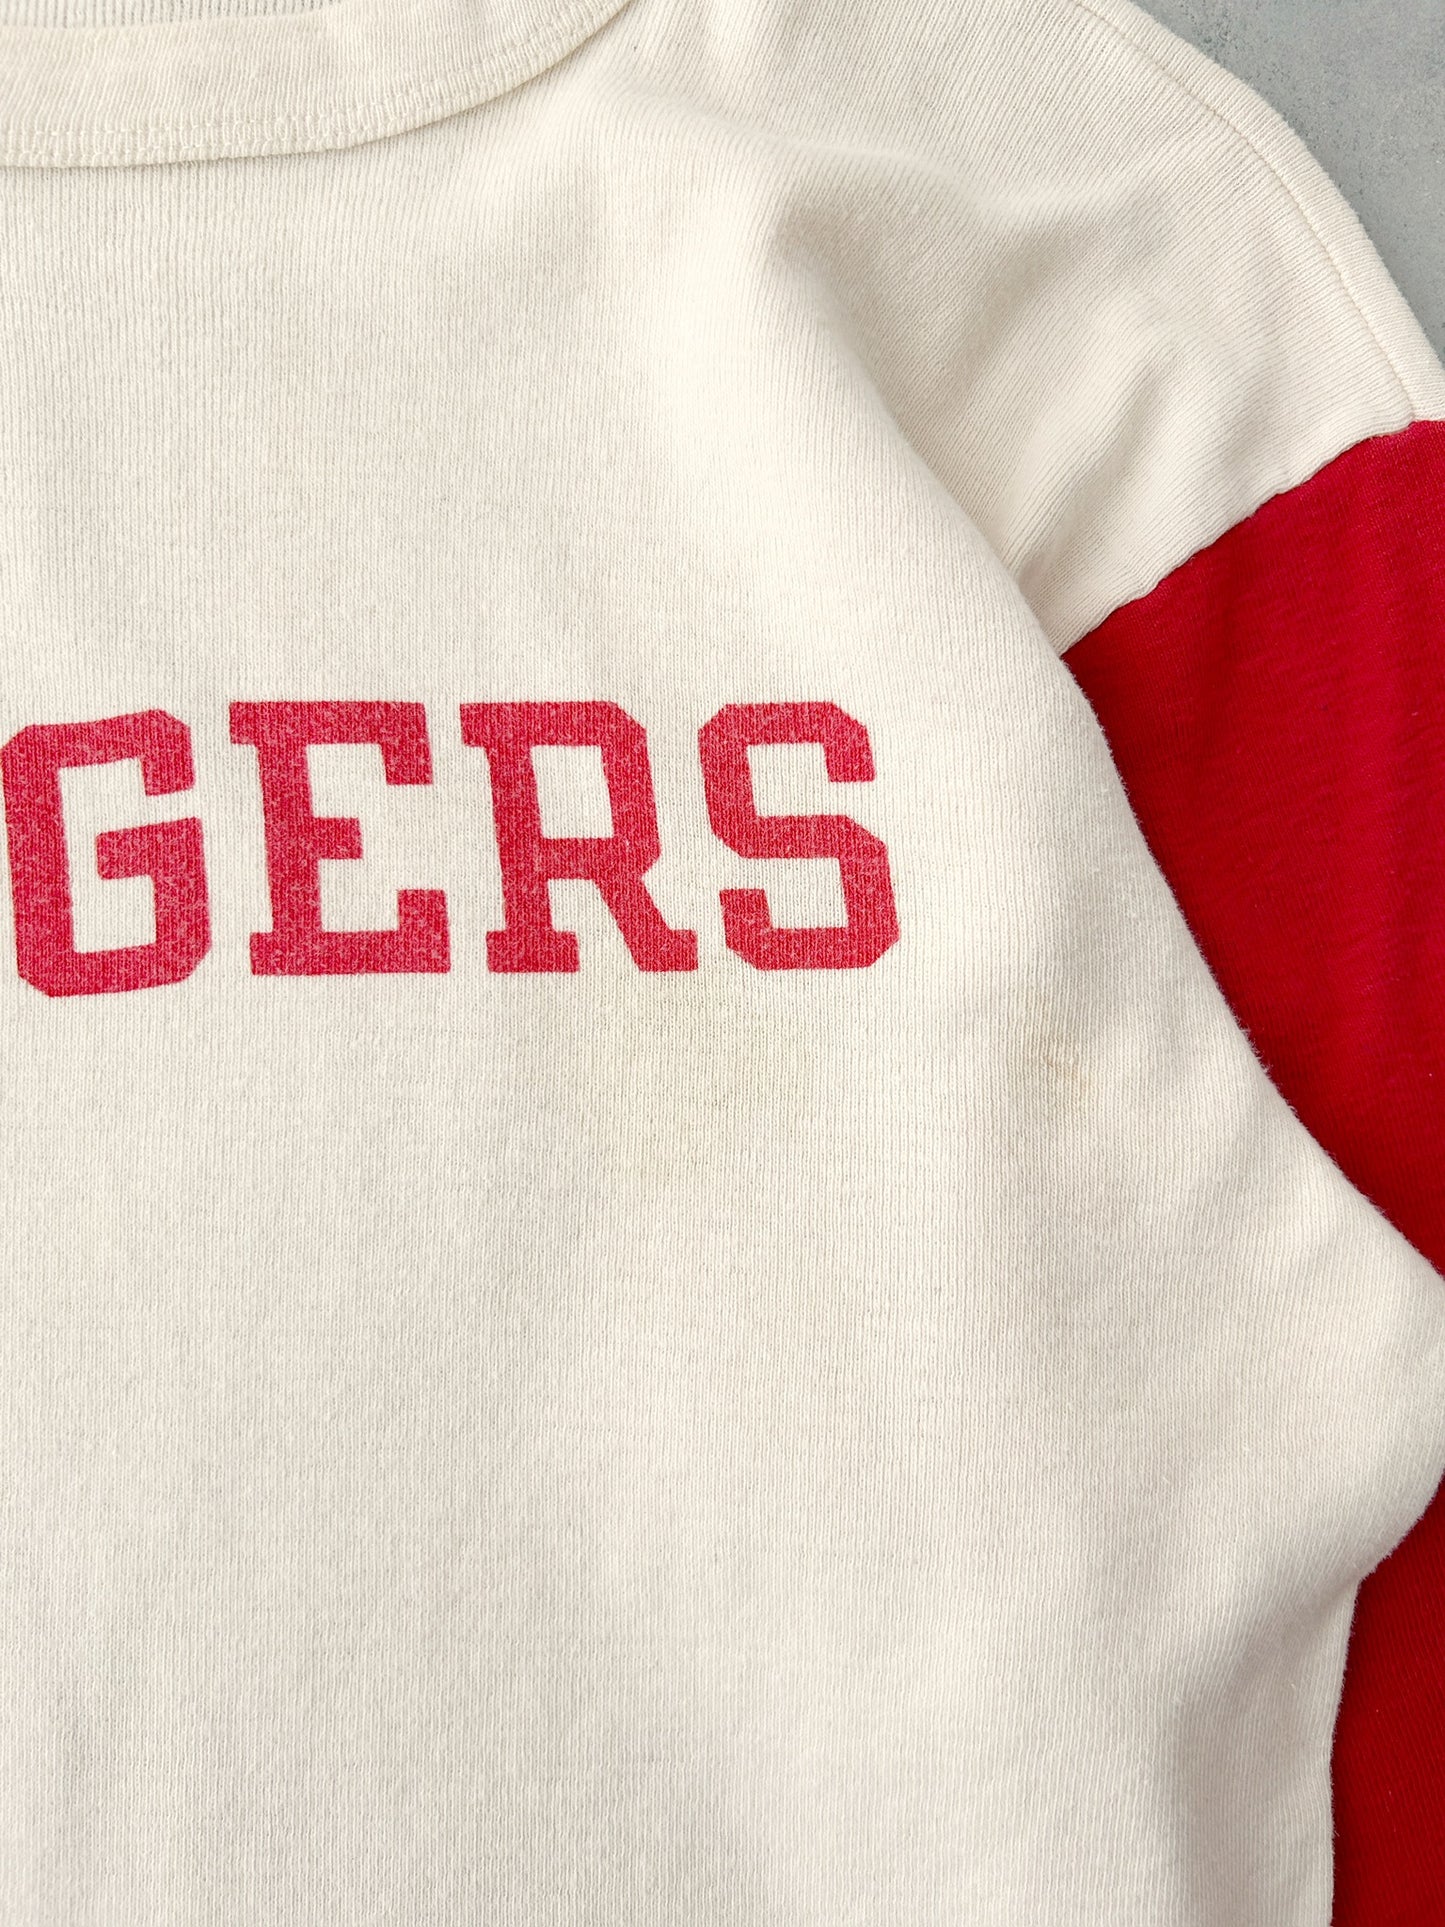 Rutgers Baseball T-Shirt 70's - Small